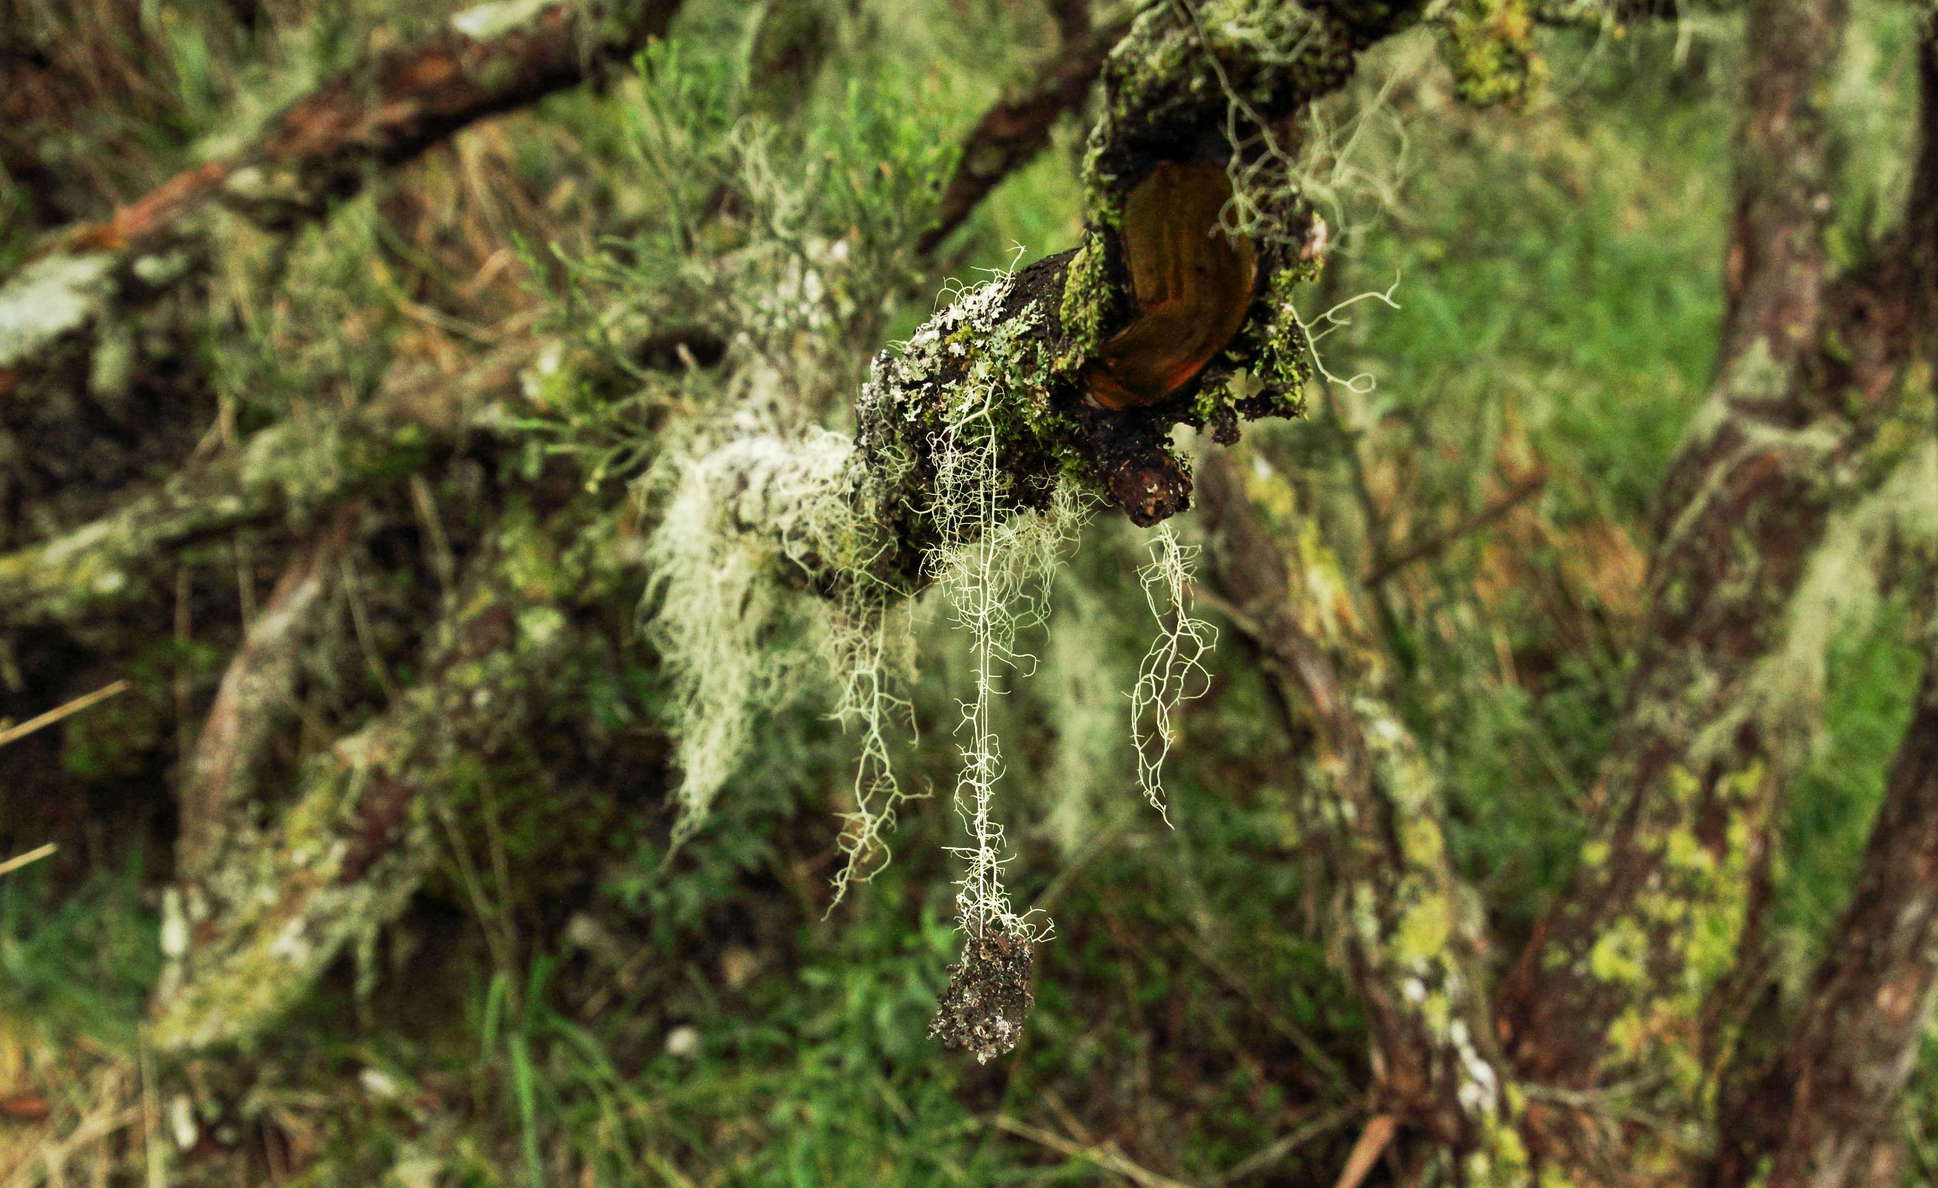 Cirque de Cilaos  |  Cloud forest with lichens